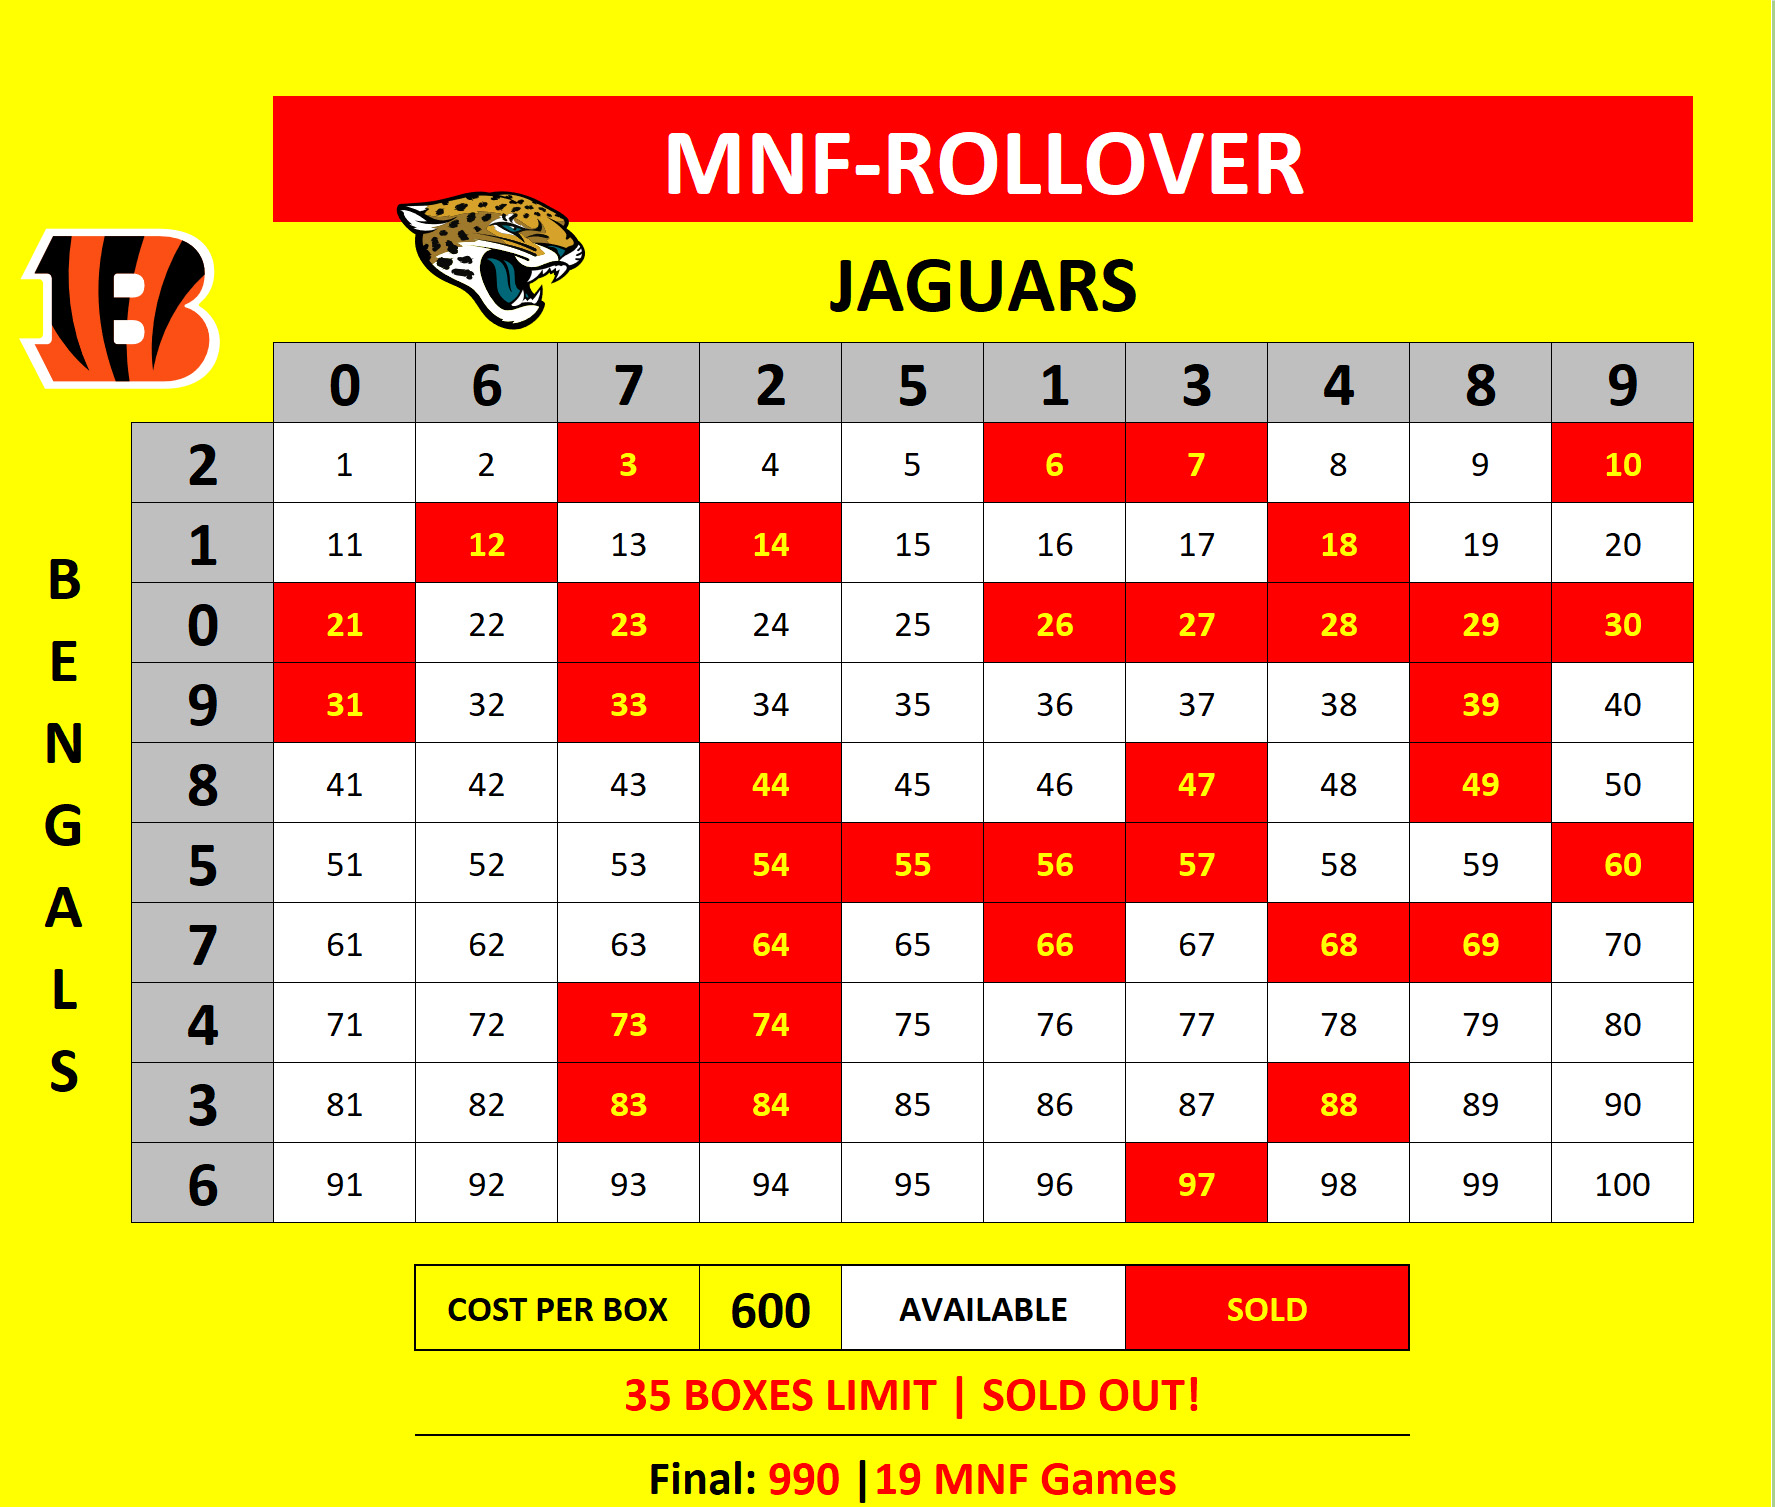 MNF-Rollover-B Bengals at Jaguars